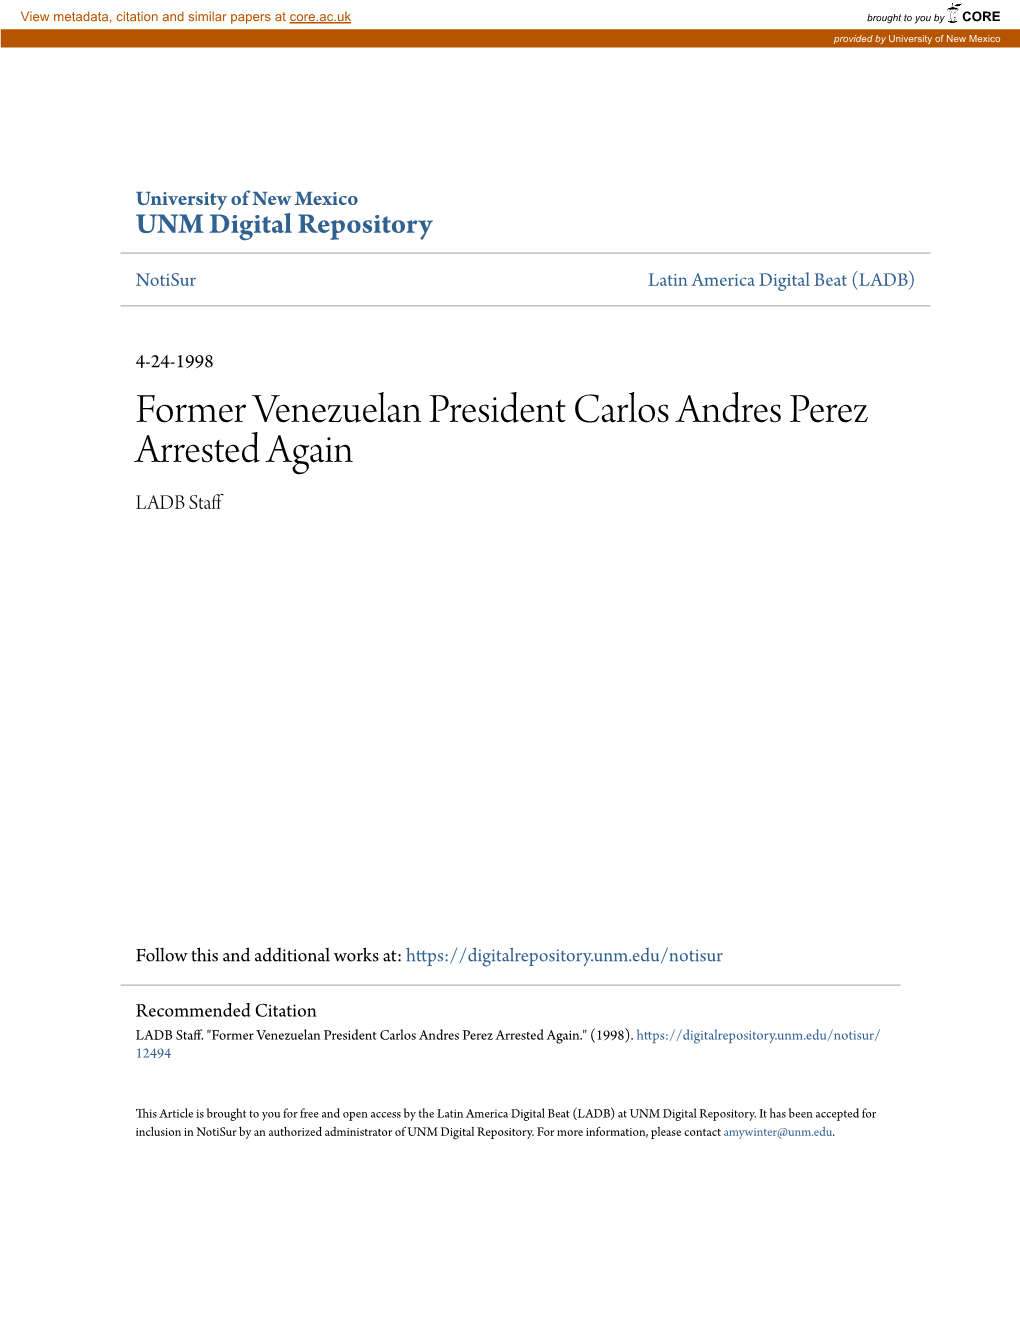 Former Venezuelan President Carlos Andres Perez Arrested Again LADB Staff